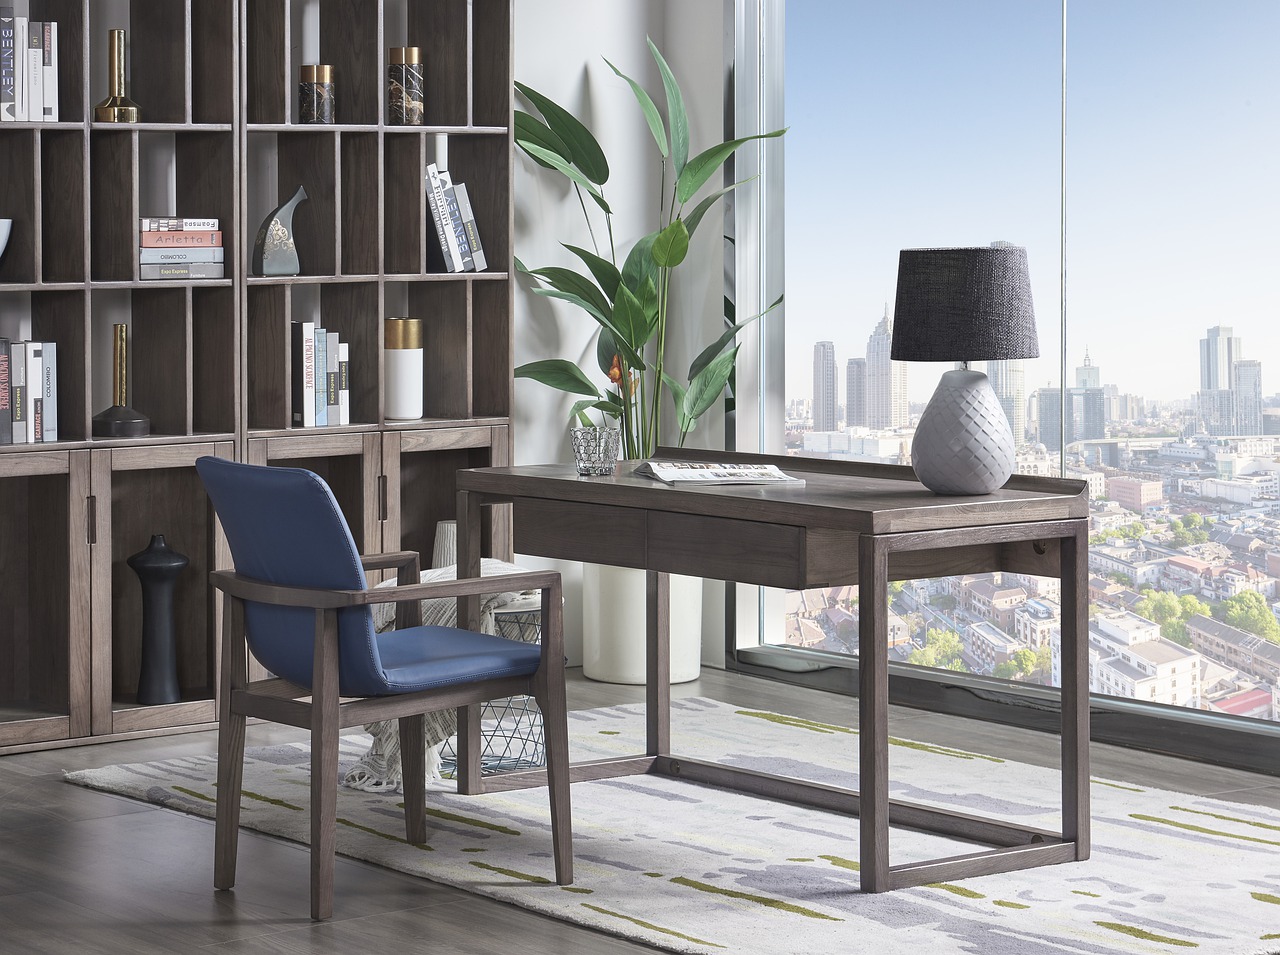 Desk Chair Interior Design Nordic  - we-o_rd35qlqp7yqyp0thf / Pixabay